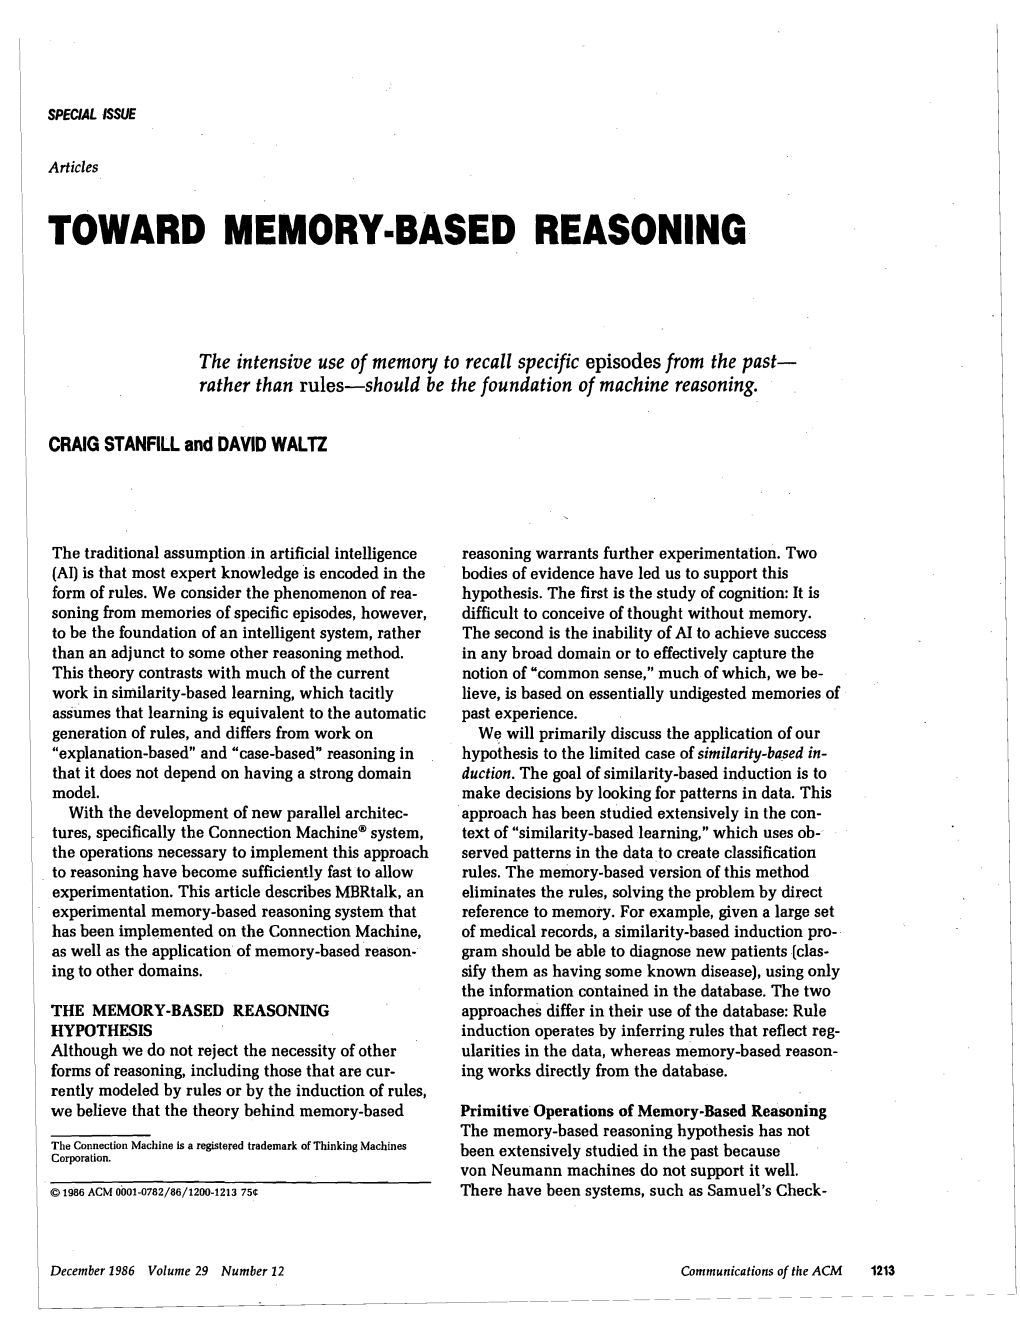 Toward Memory-Based Reasoning